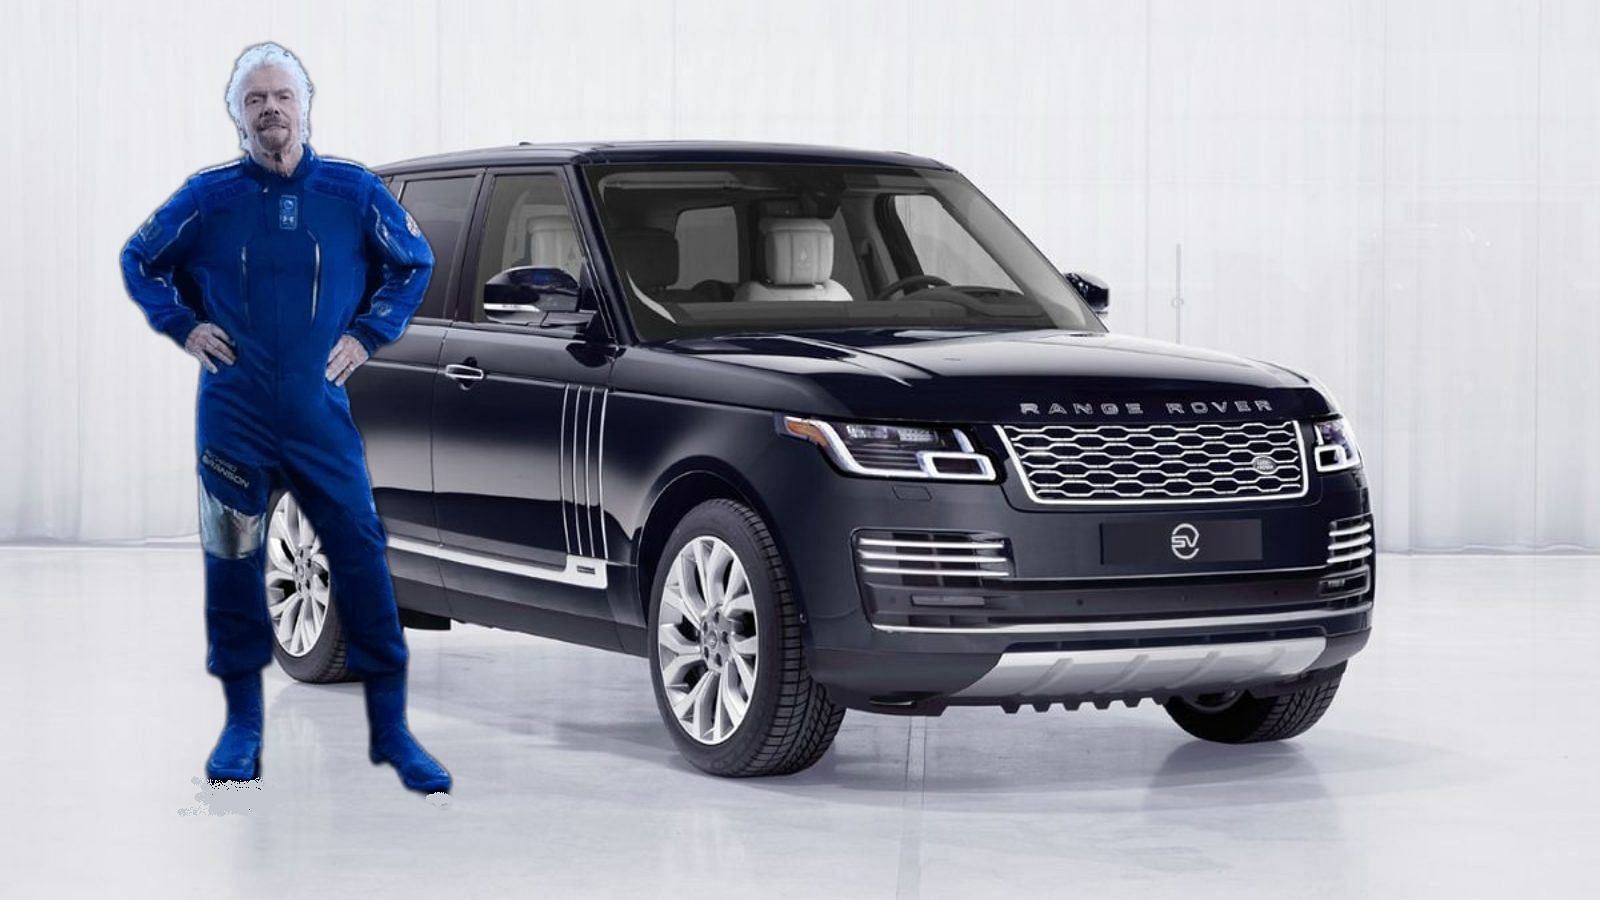 Richard Branson with Range Rover Astronaut Edition SUV